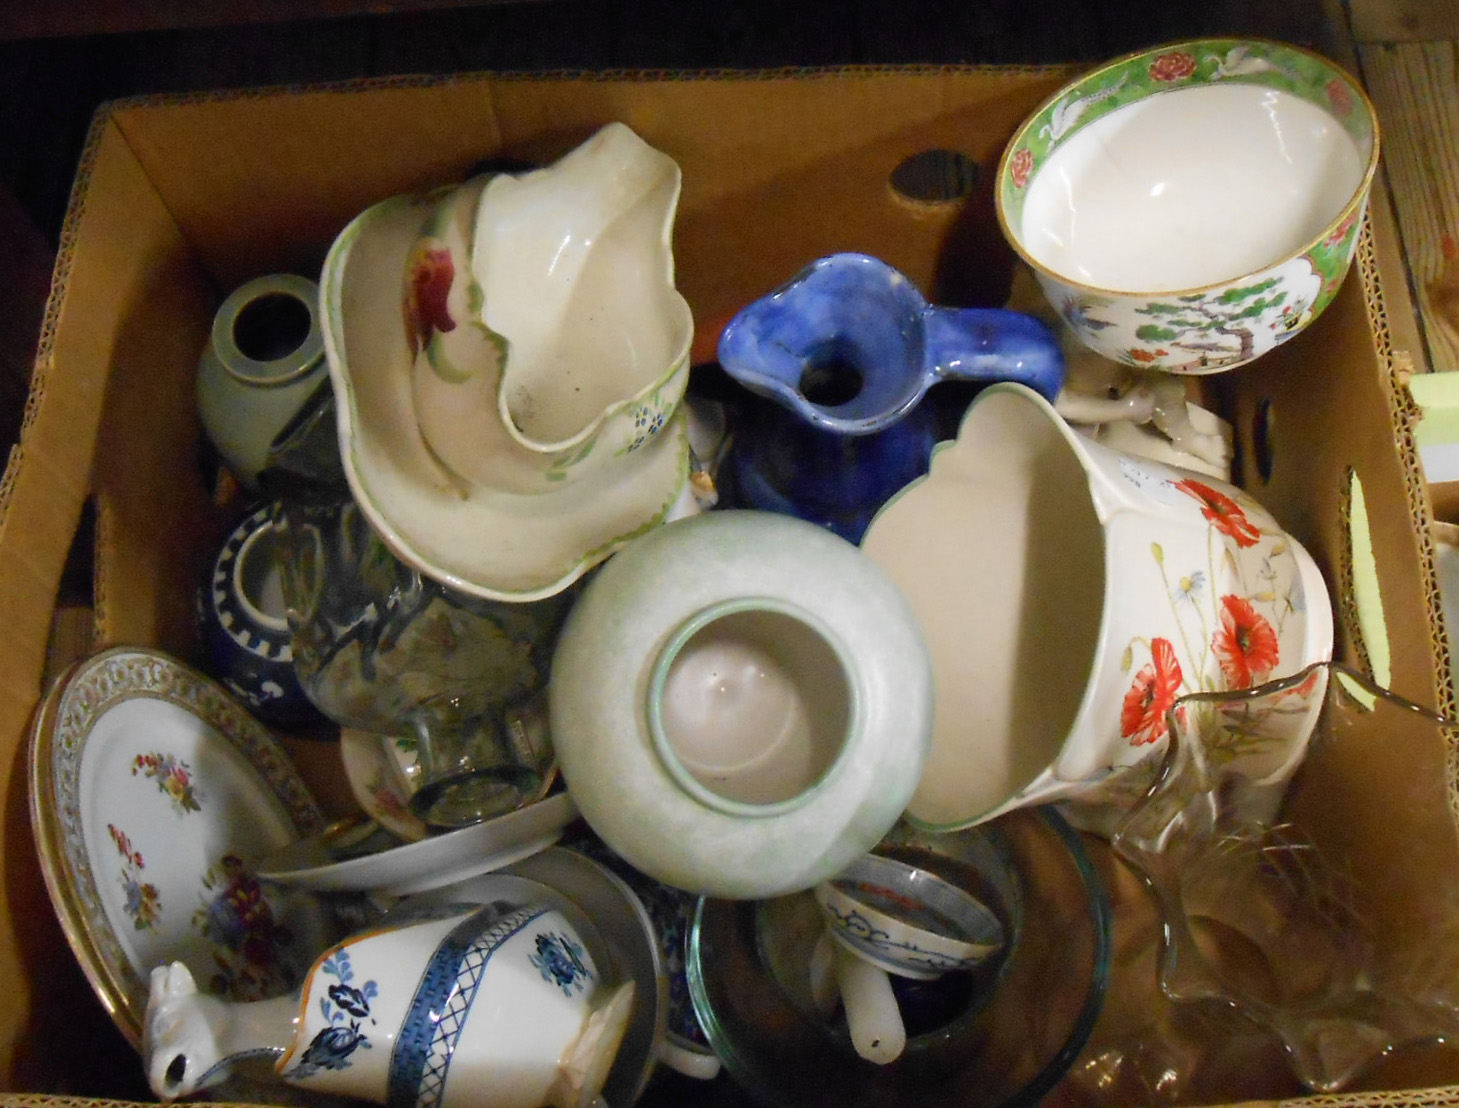 A box containing assorted ceramic items including Staffordshire cow creamers, etc. - various